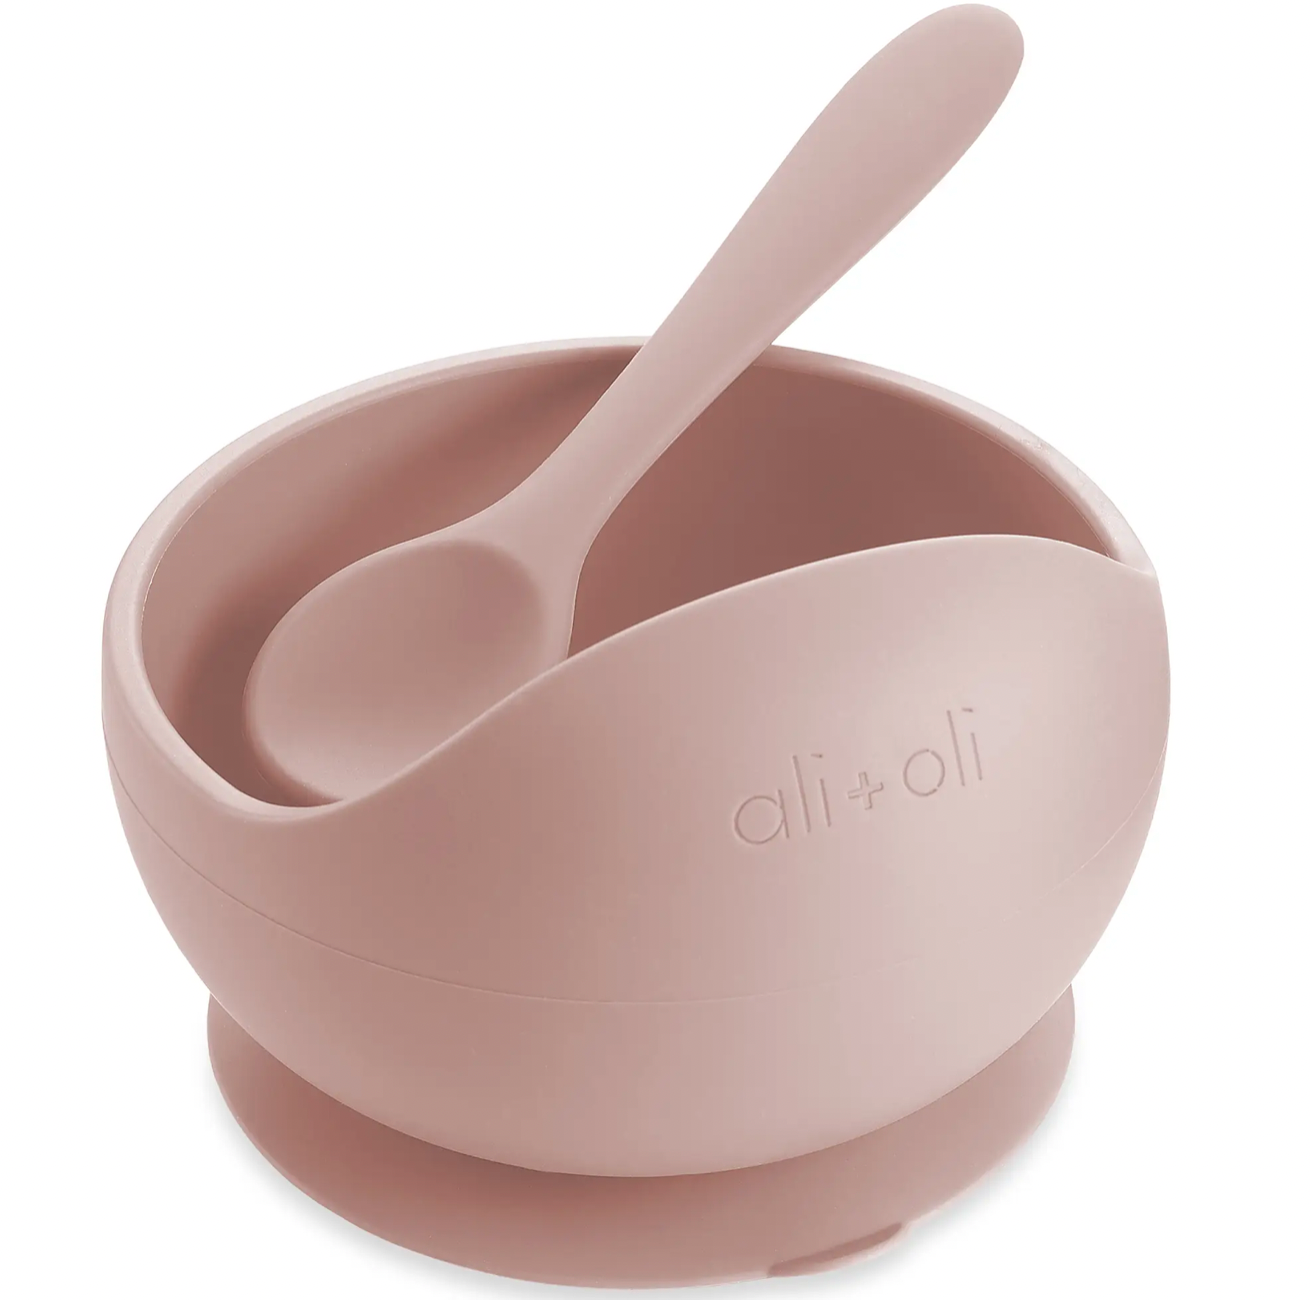 Silicone Suction Bowl & Spoon Set, Blush